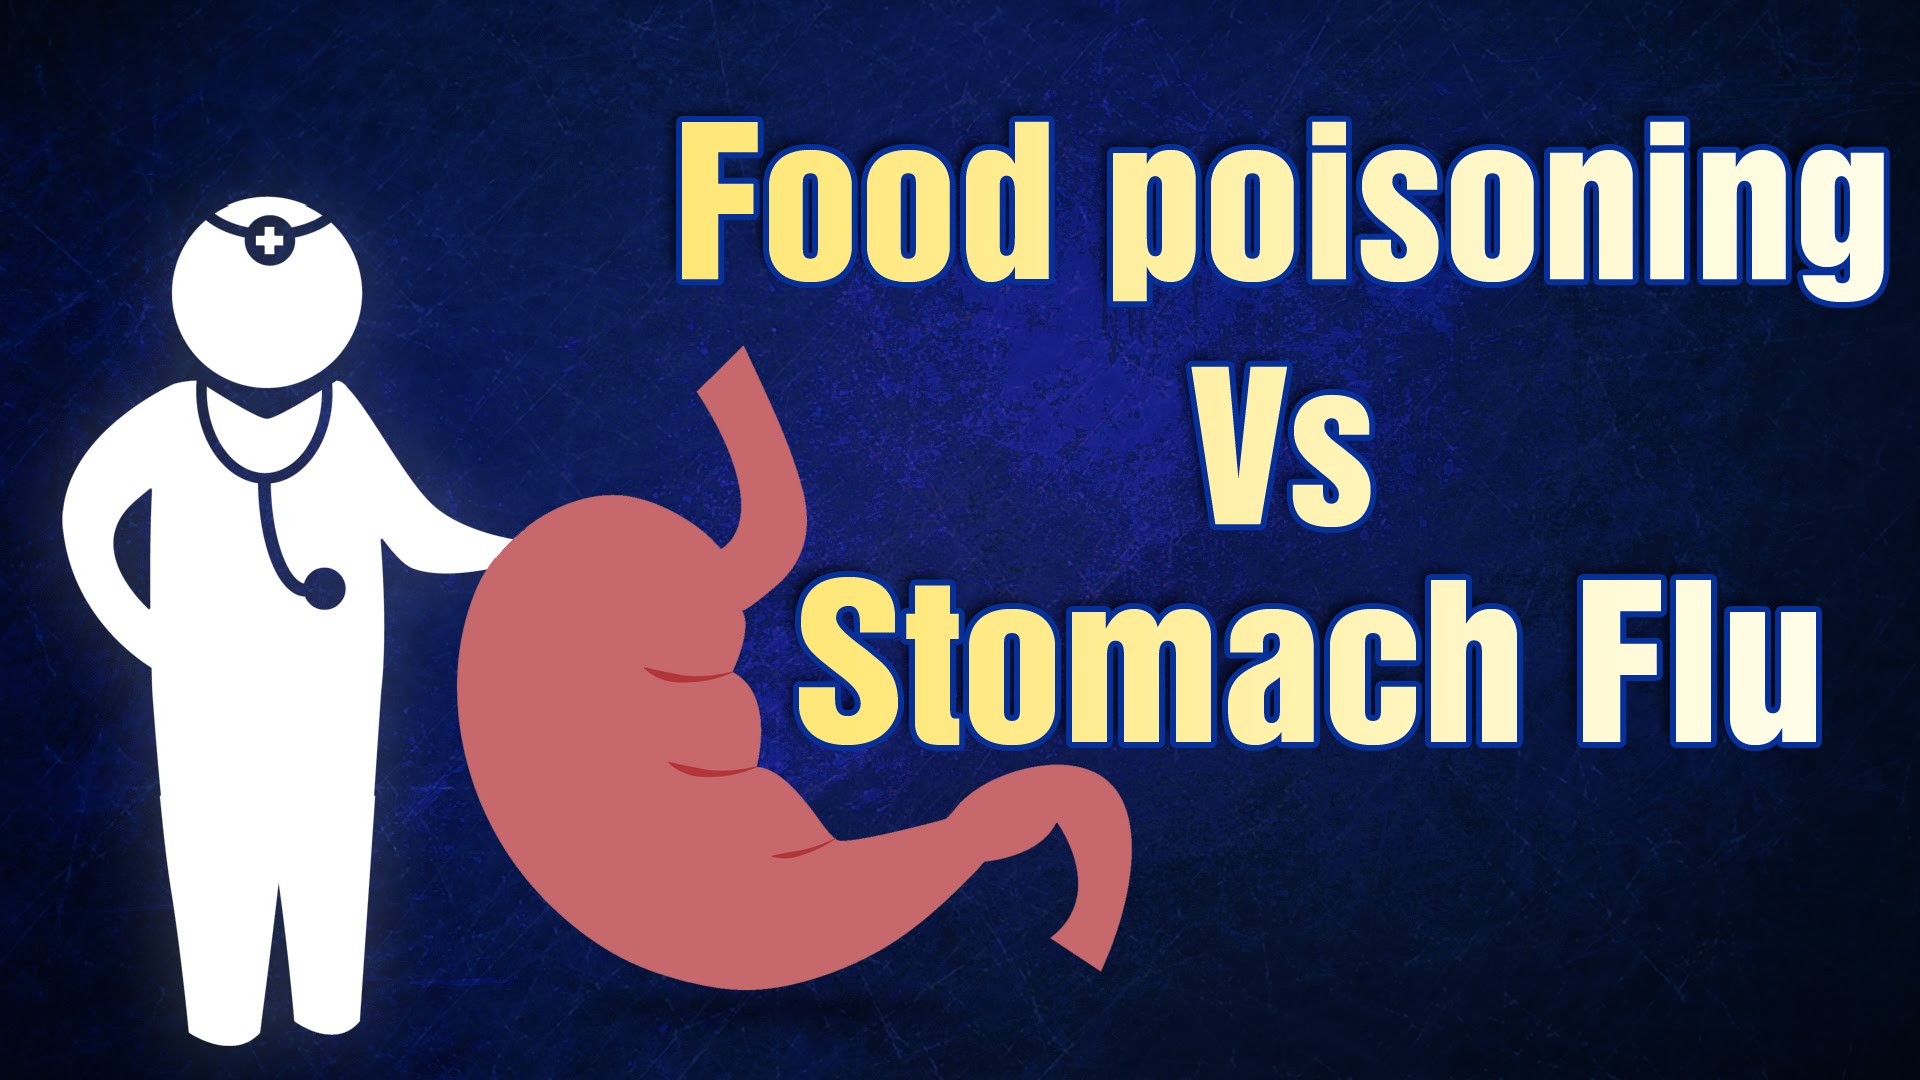 stomach flu vs food poisoning